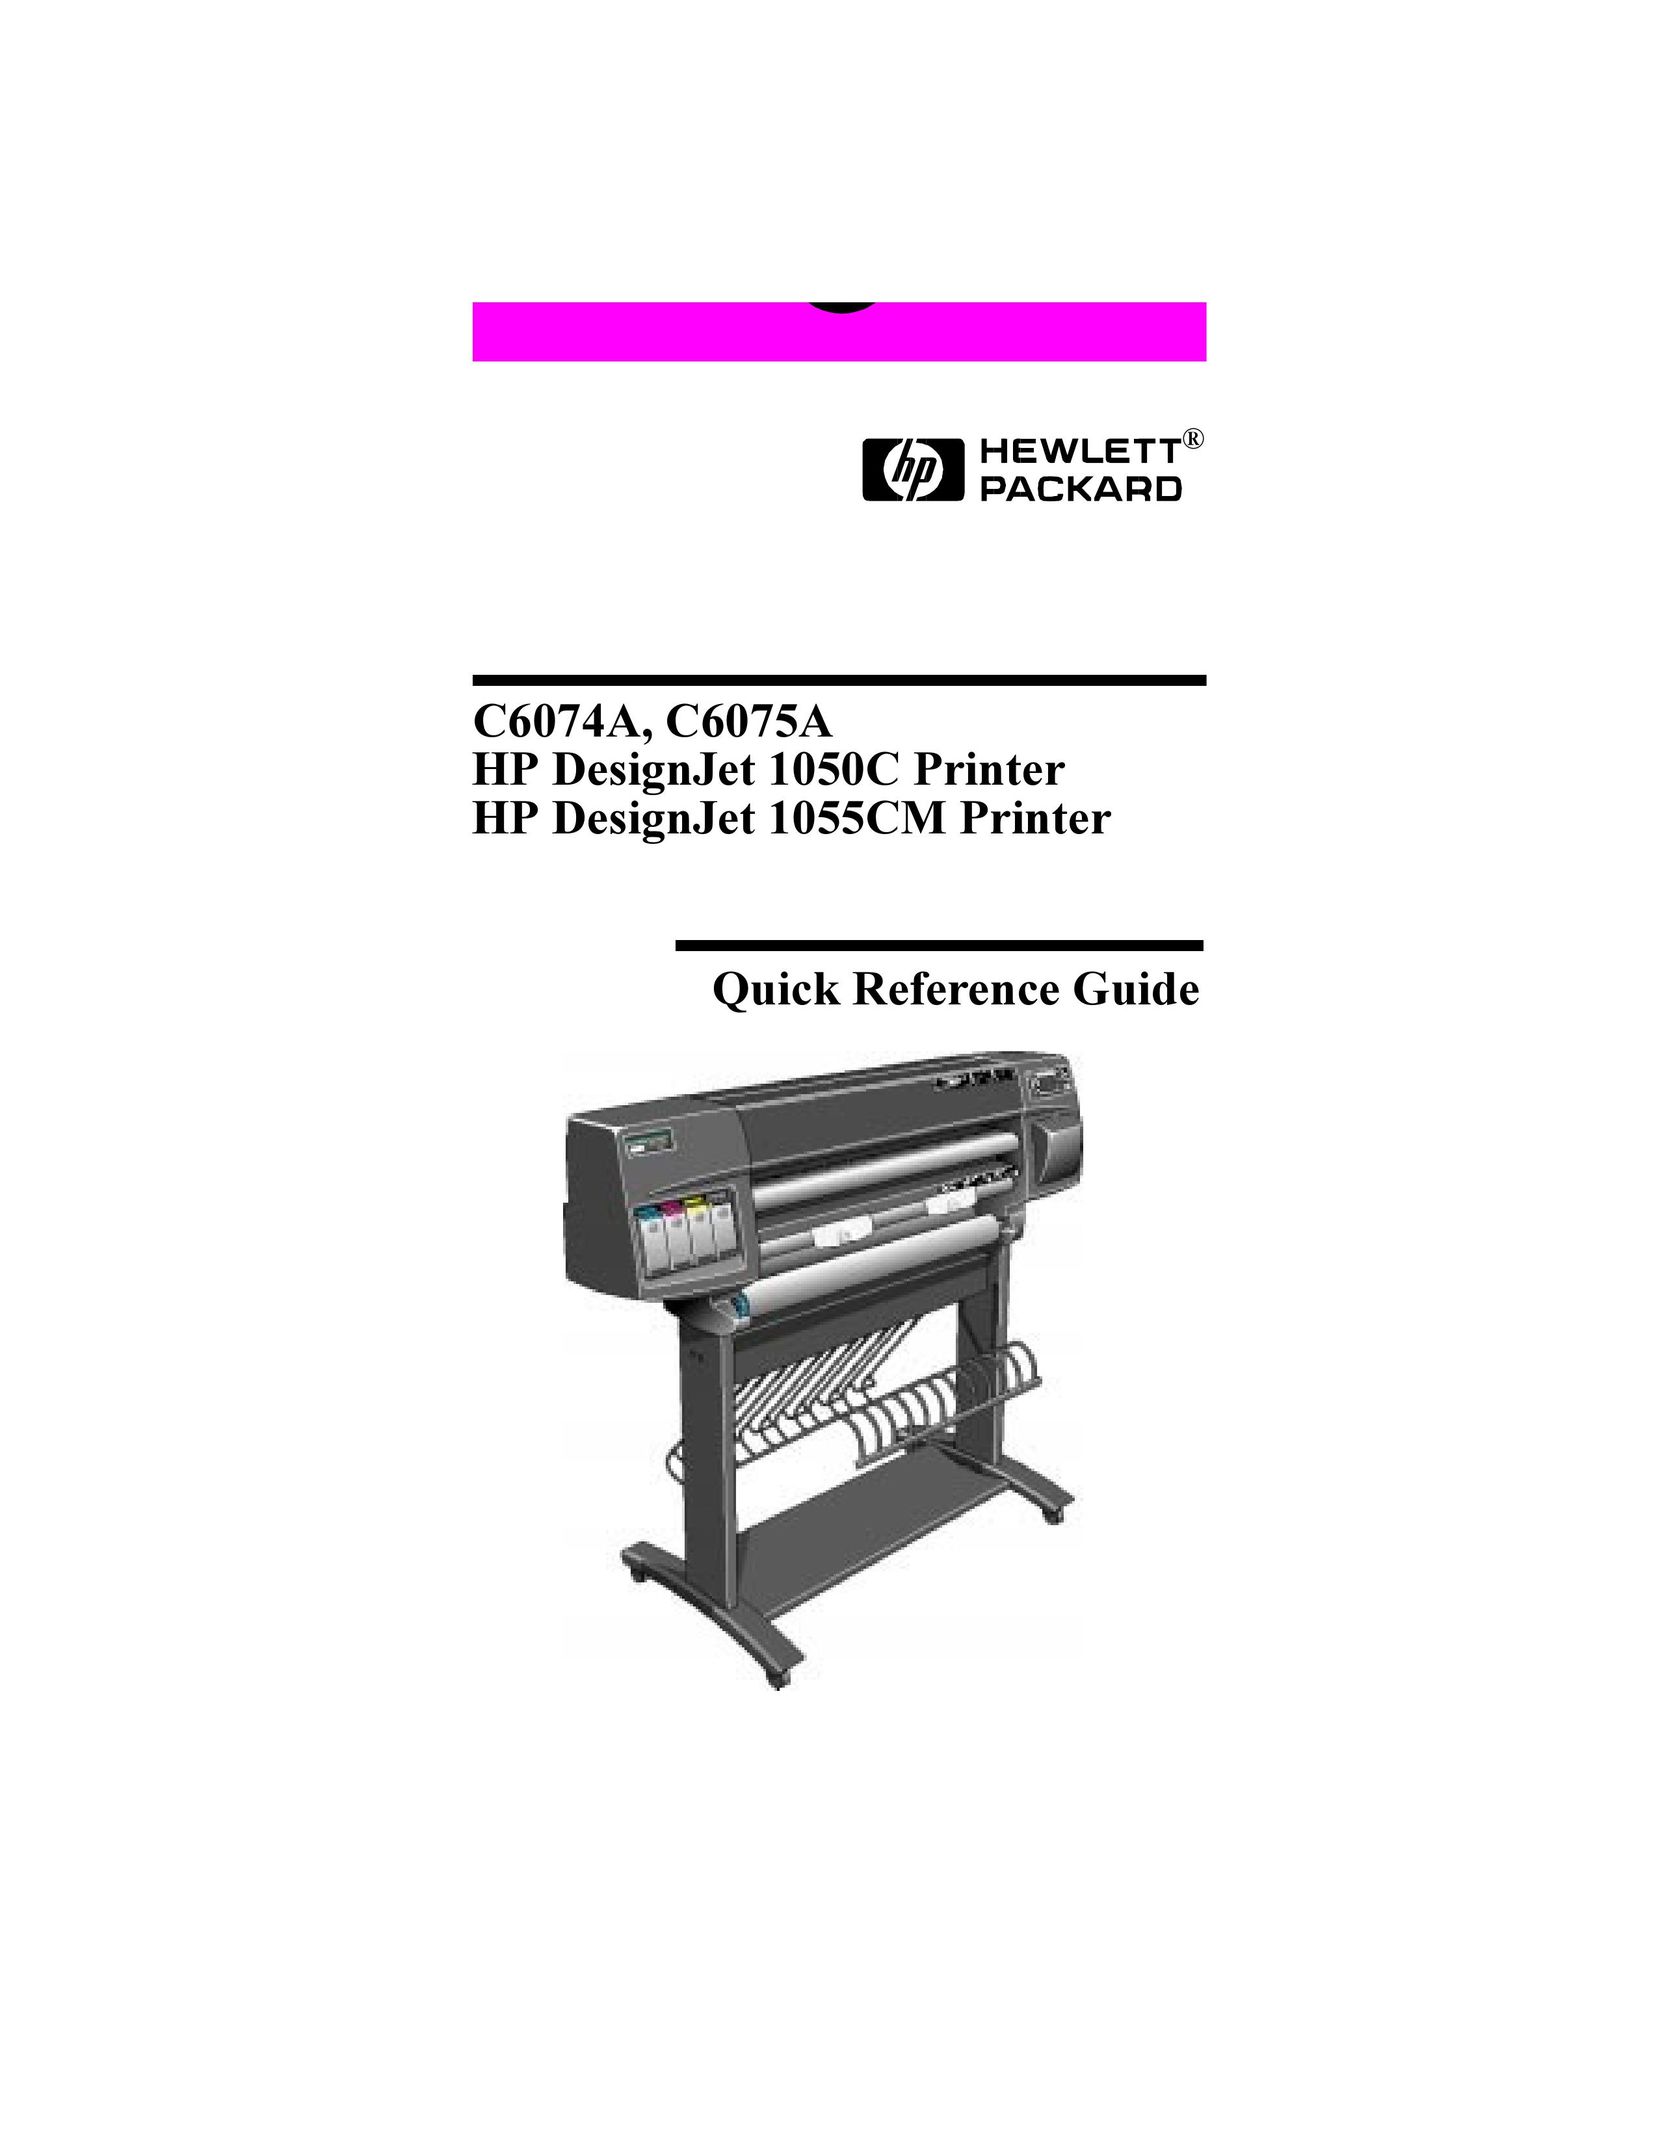 HP (Hewlett-Packard) 1055CM Printer User Manual